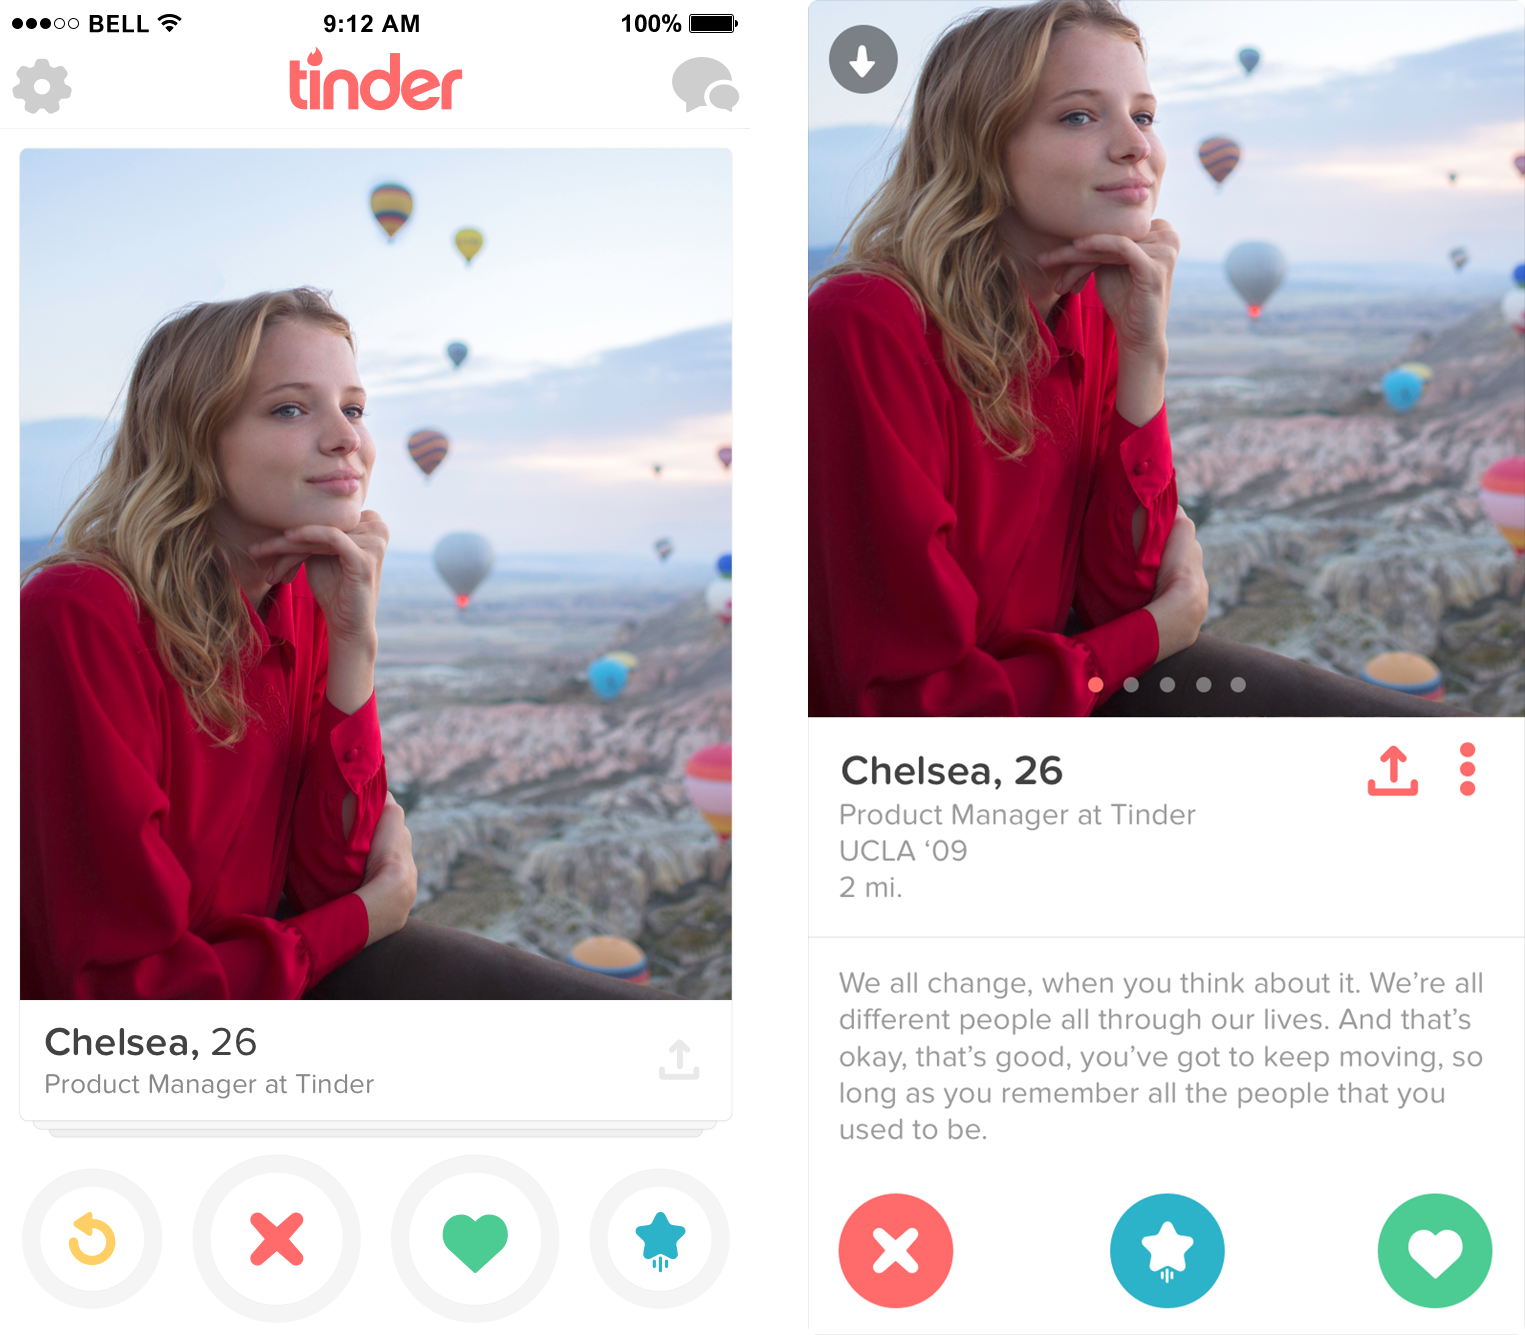 New Tinder matchmaking tool